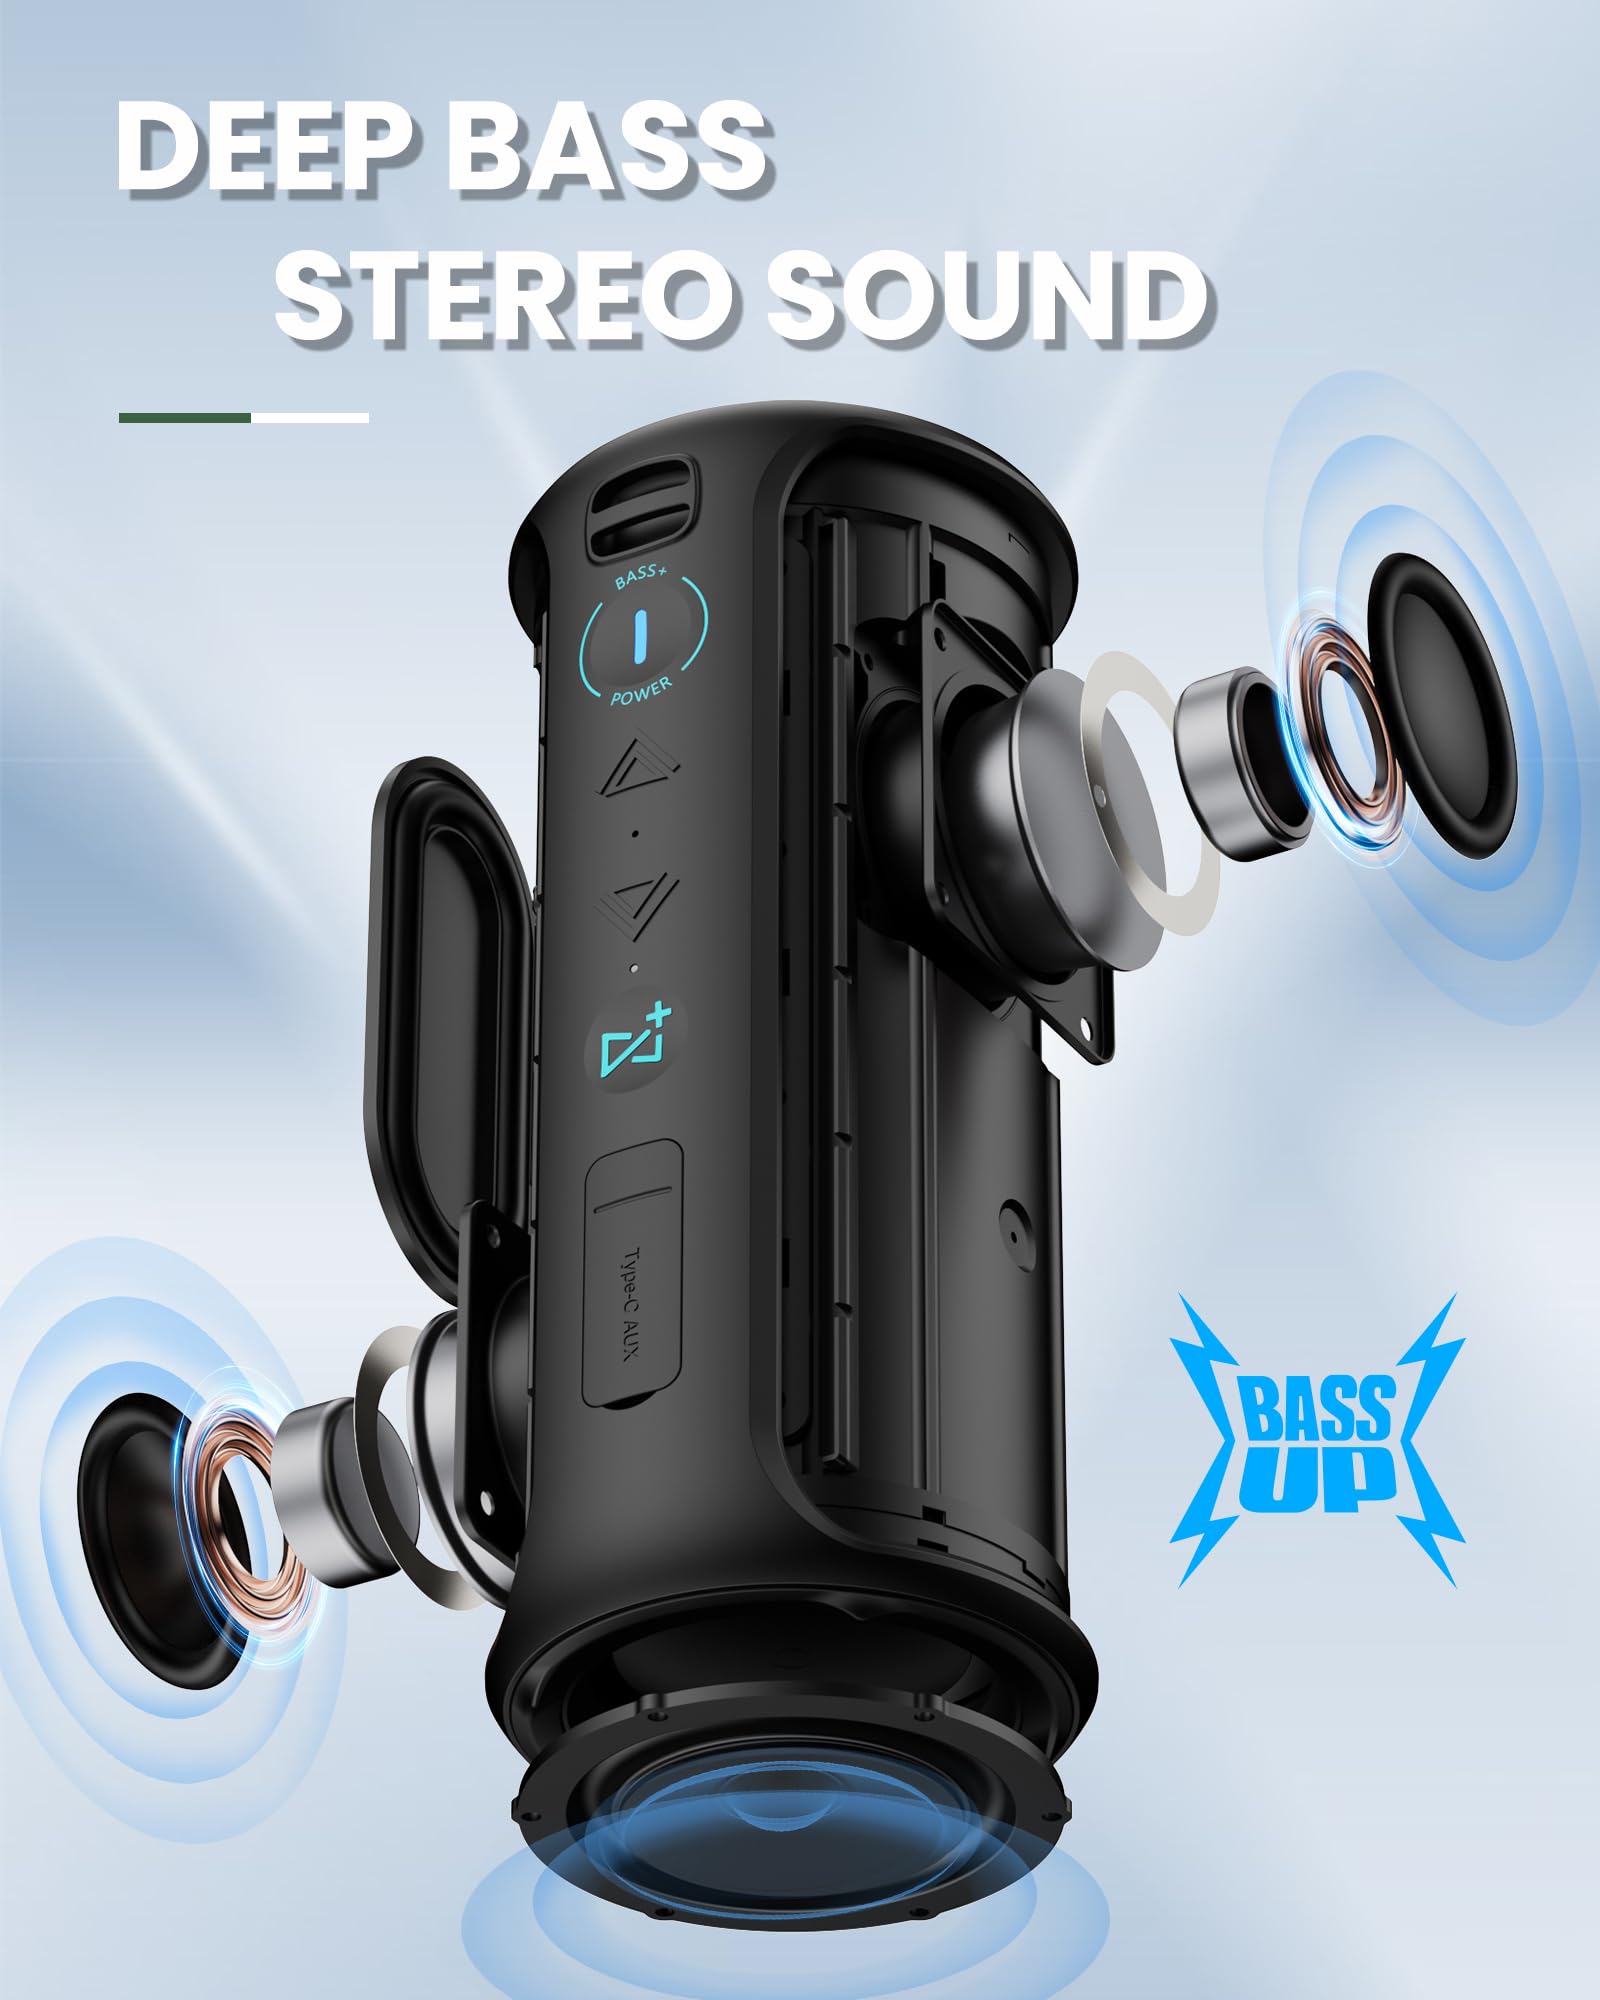 Raymate Bluetooth Speakers, Pair up to 100 Speakers,IPX7 Waterproof Speaker Wireless Bluetooth-V5.3, HiFi Stereo Sound, 1100mins